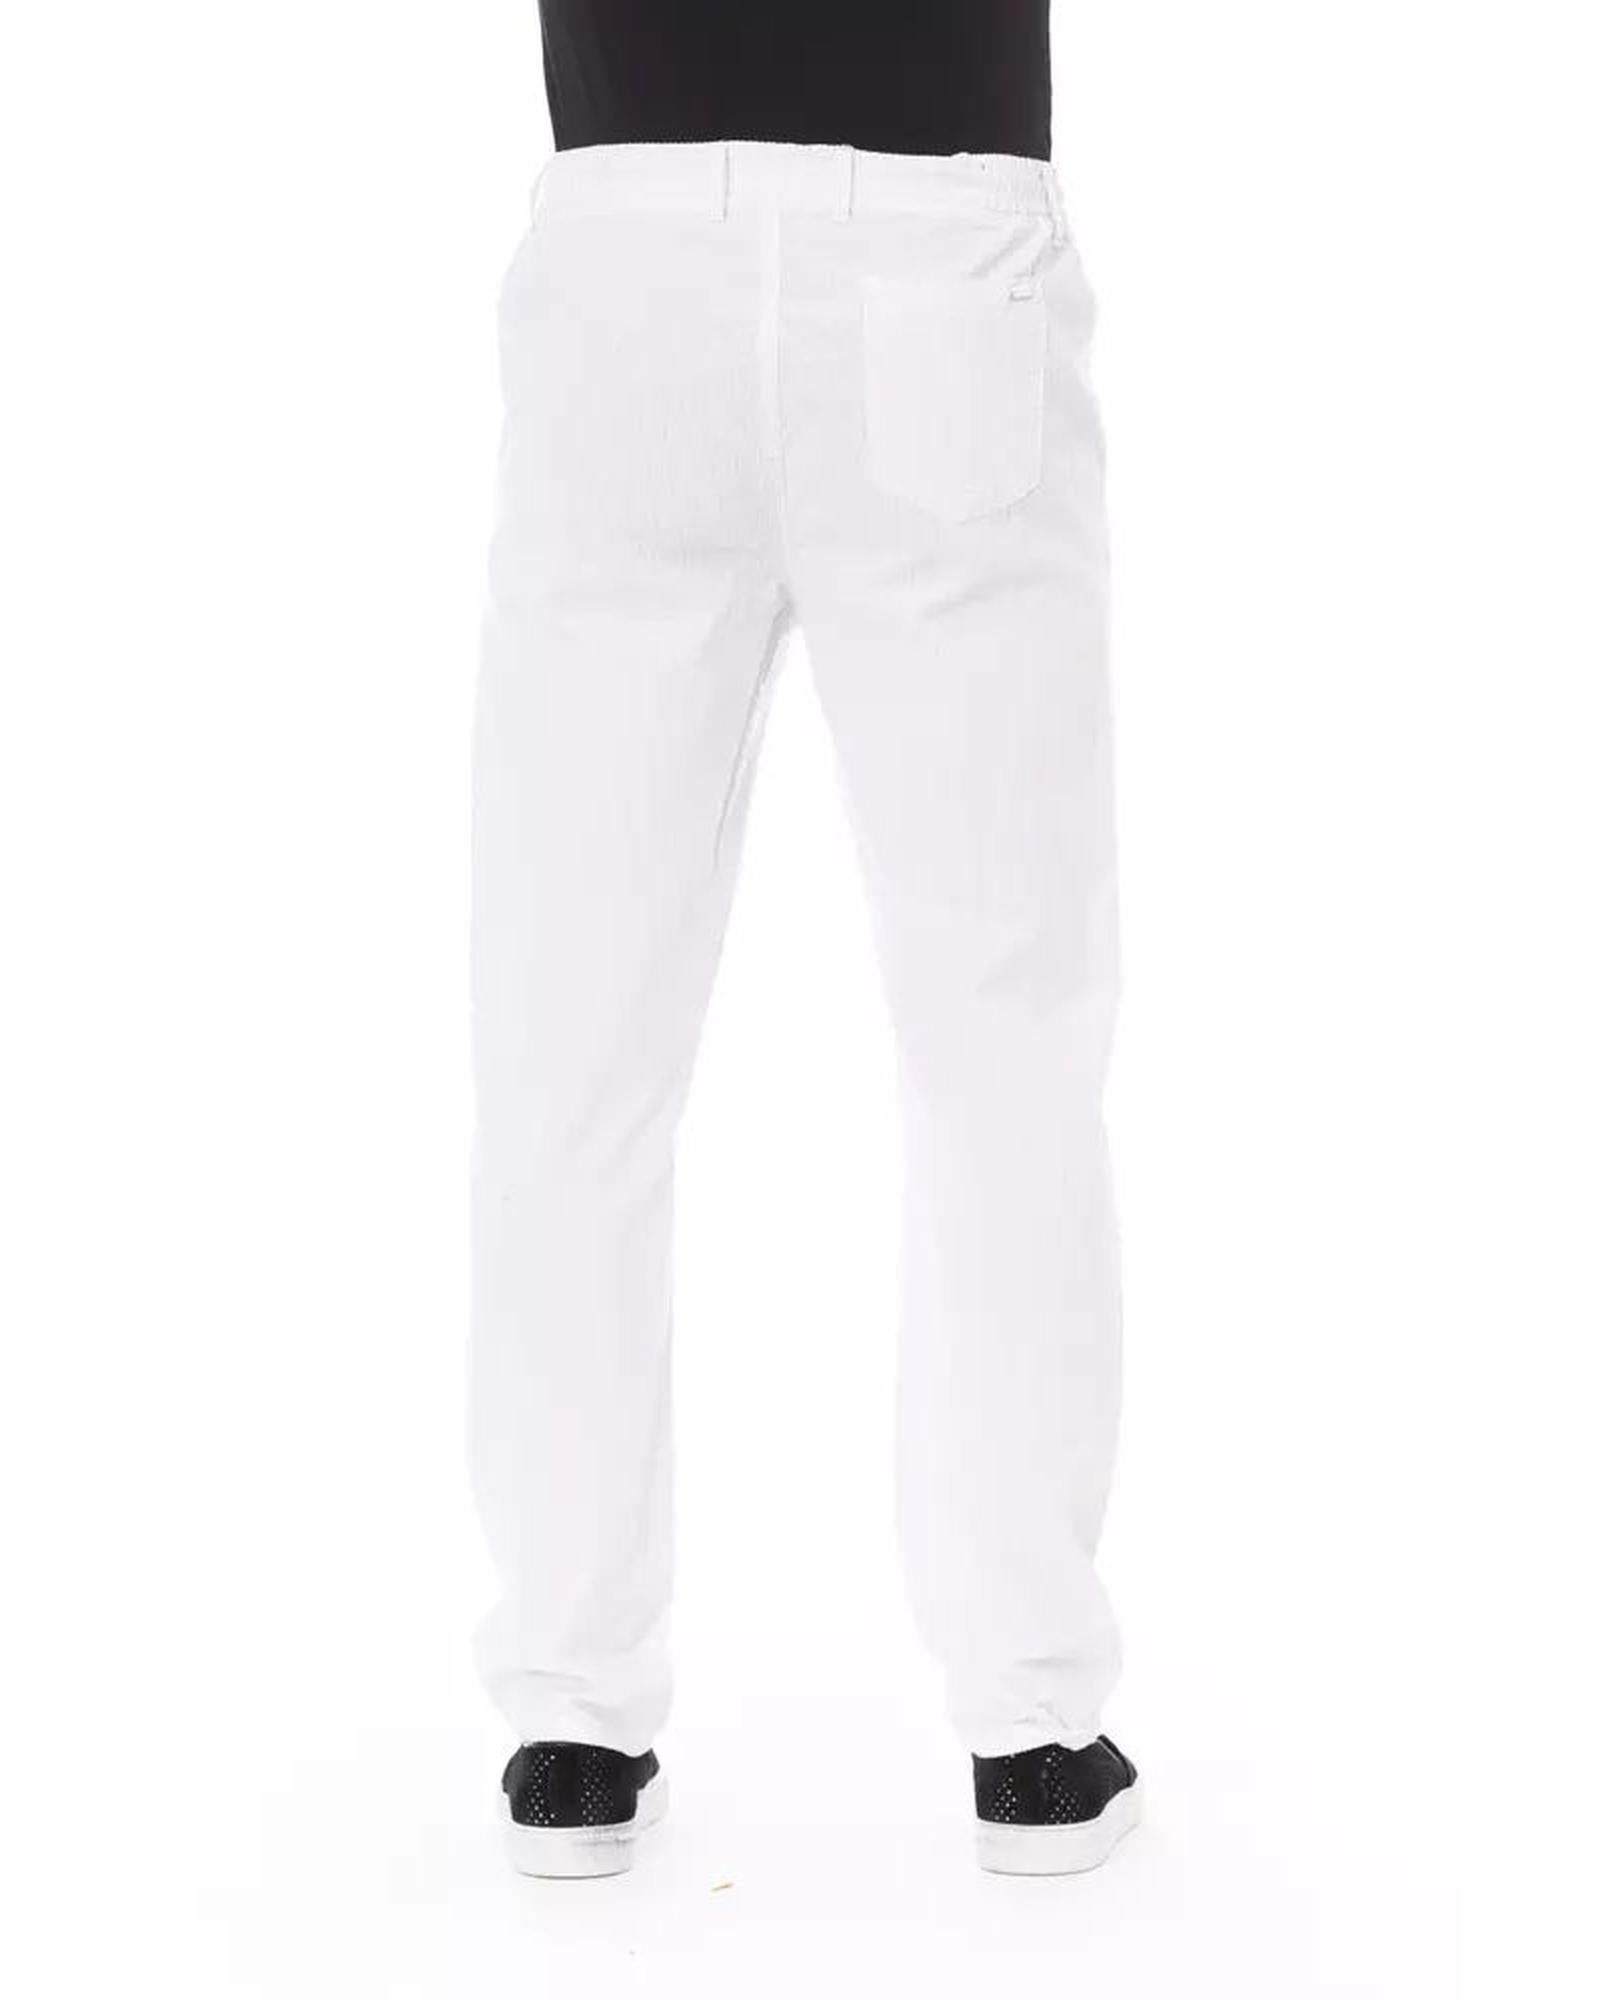 Men's White Cotton Jeans & Pant - W36 US